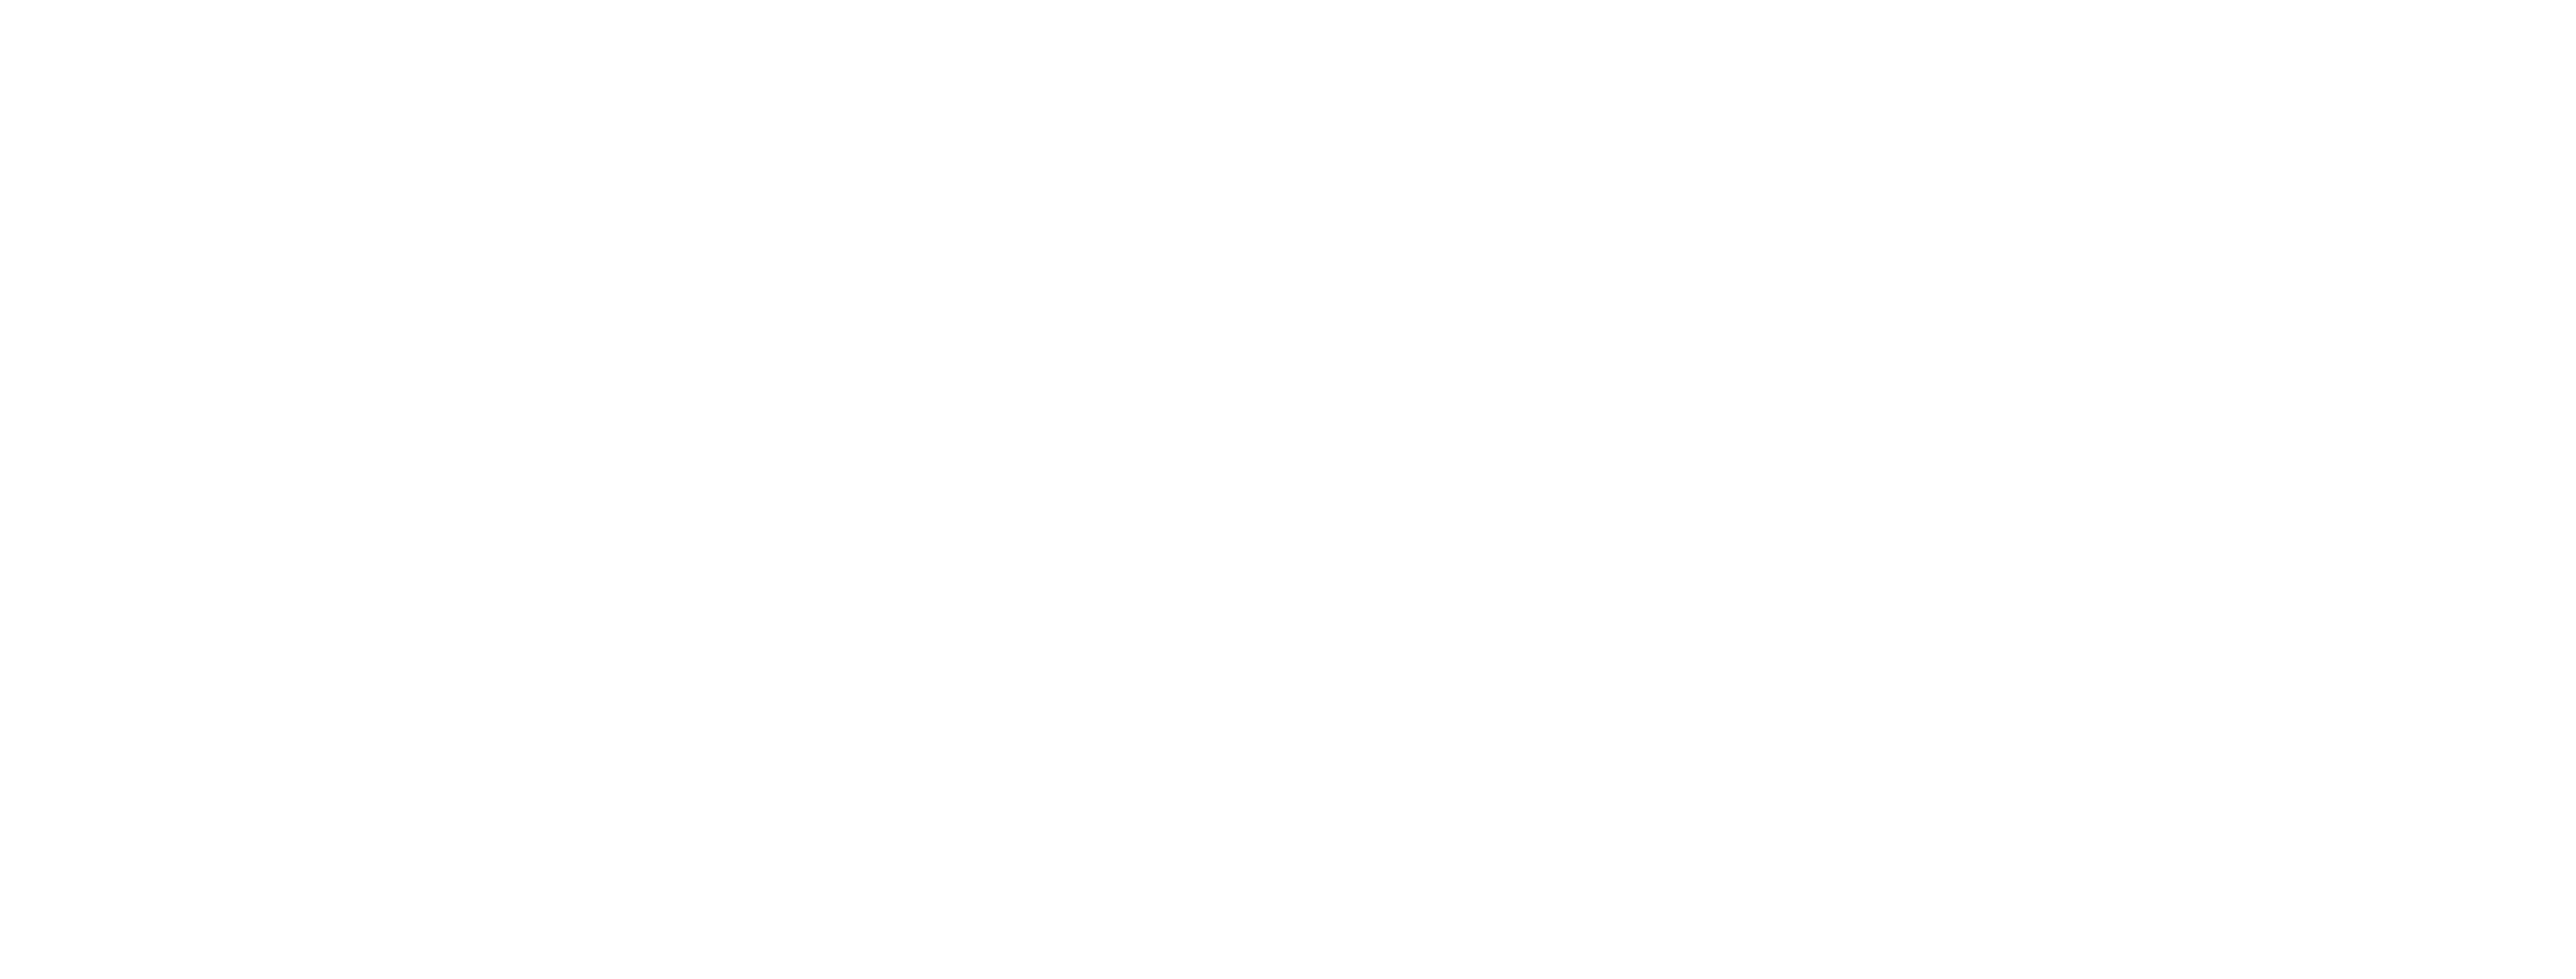 Southern Nevada Junior Golf